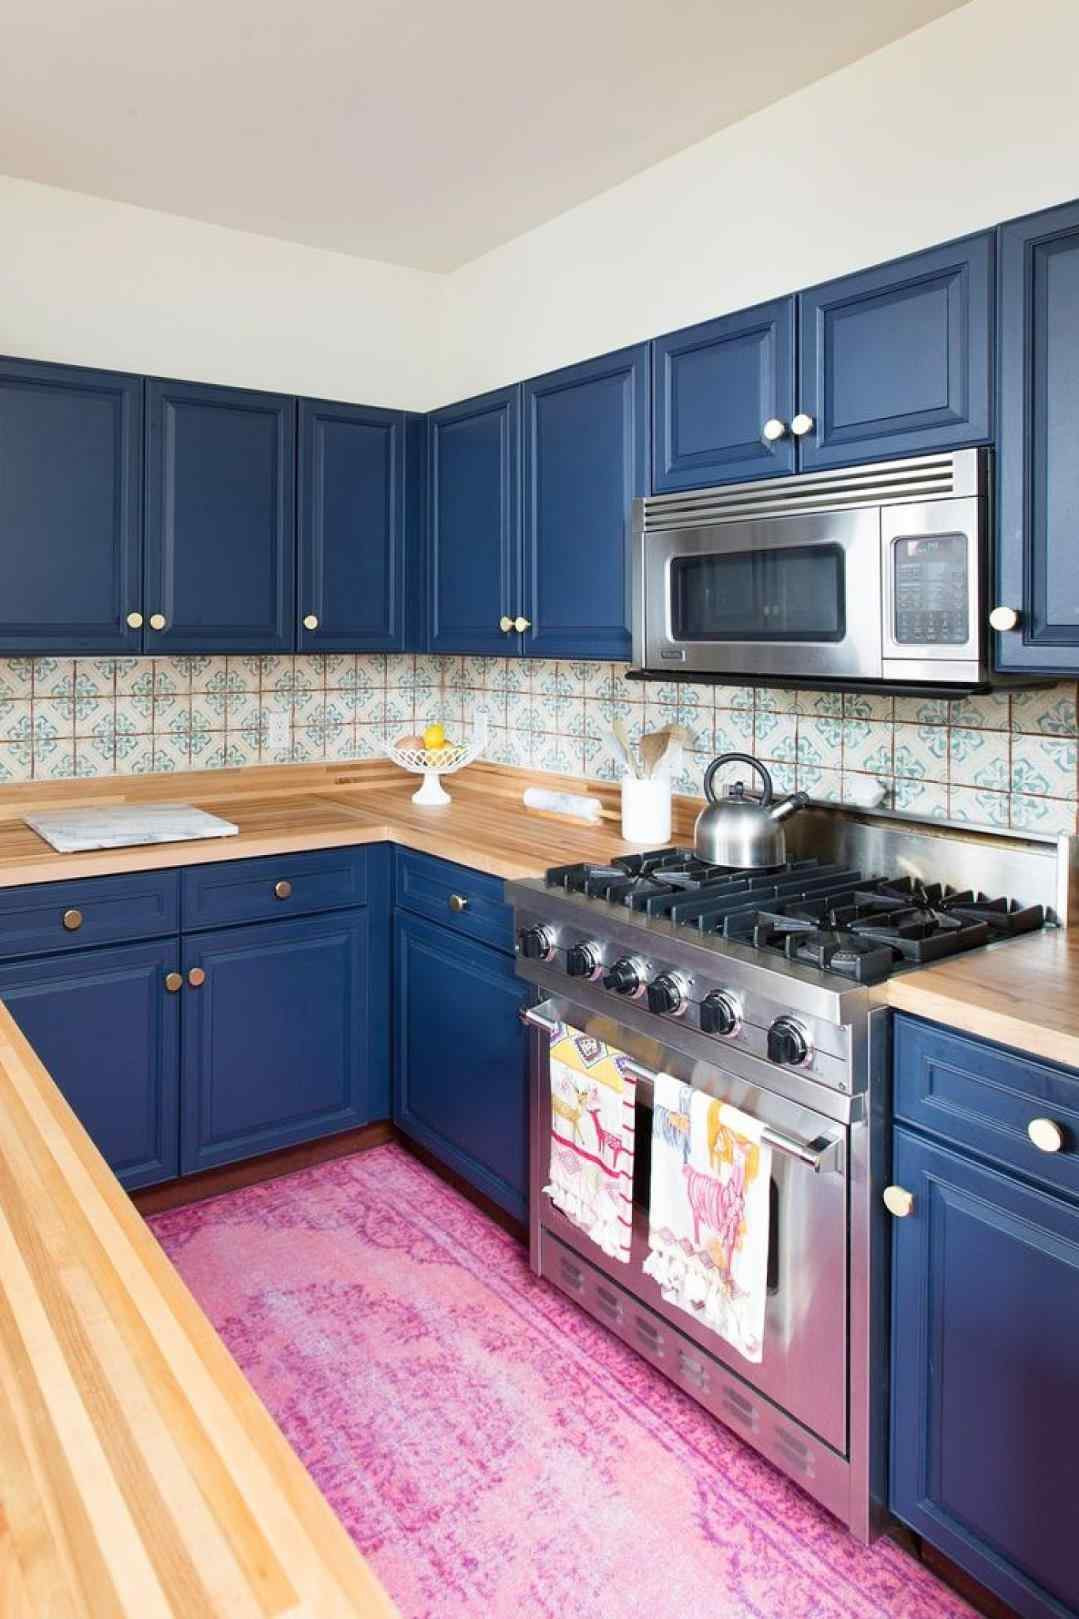 Best ideas about Cobalt Blue Kitchen Decor
. Save or Pin Houzz Cobalt Blue Kitchen Decor Small Kitchens Cobalt Blue Now.